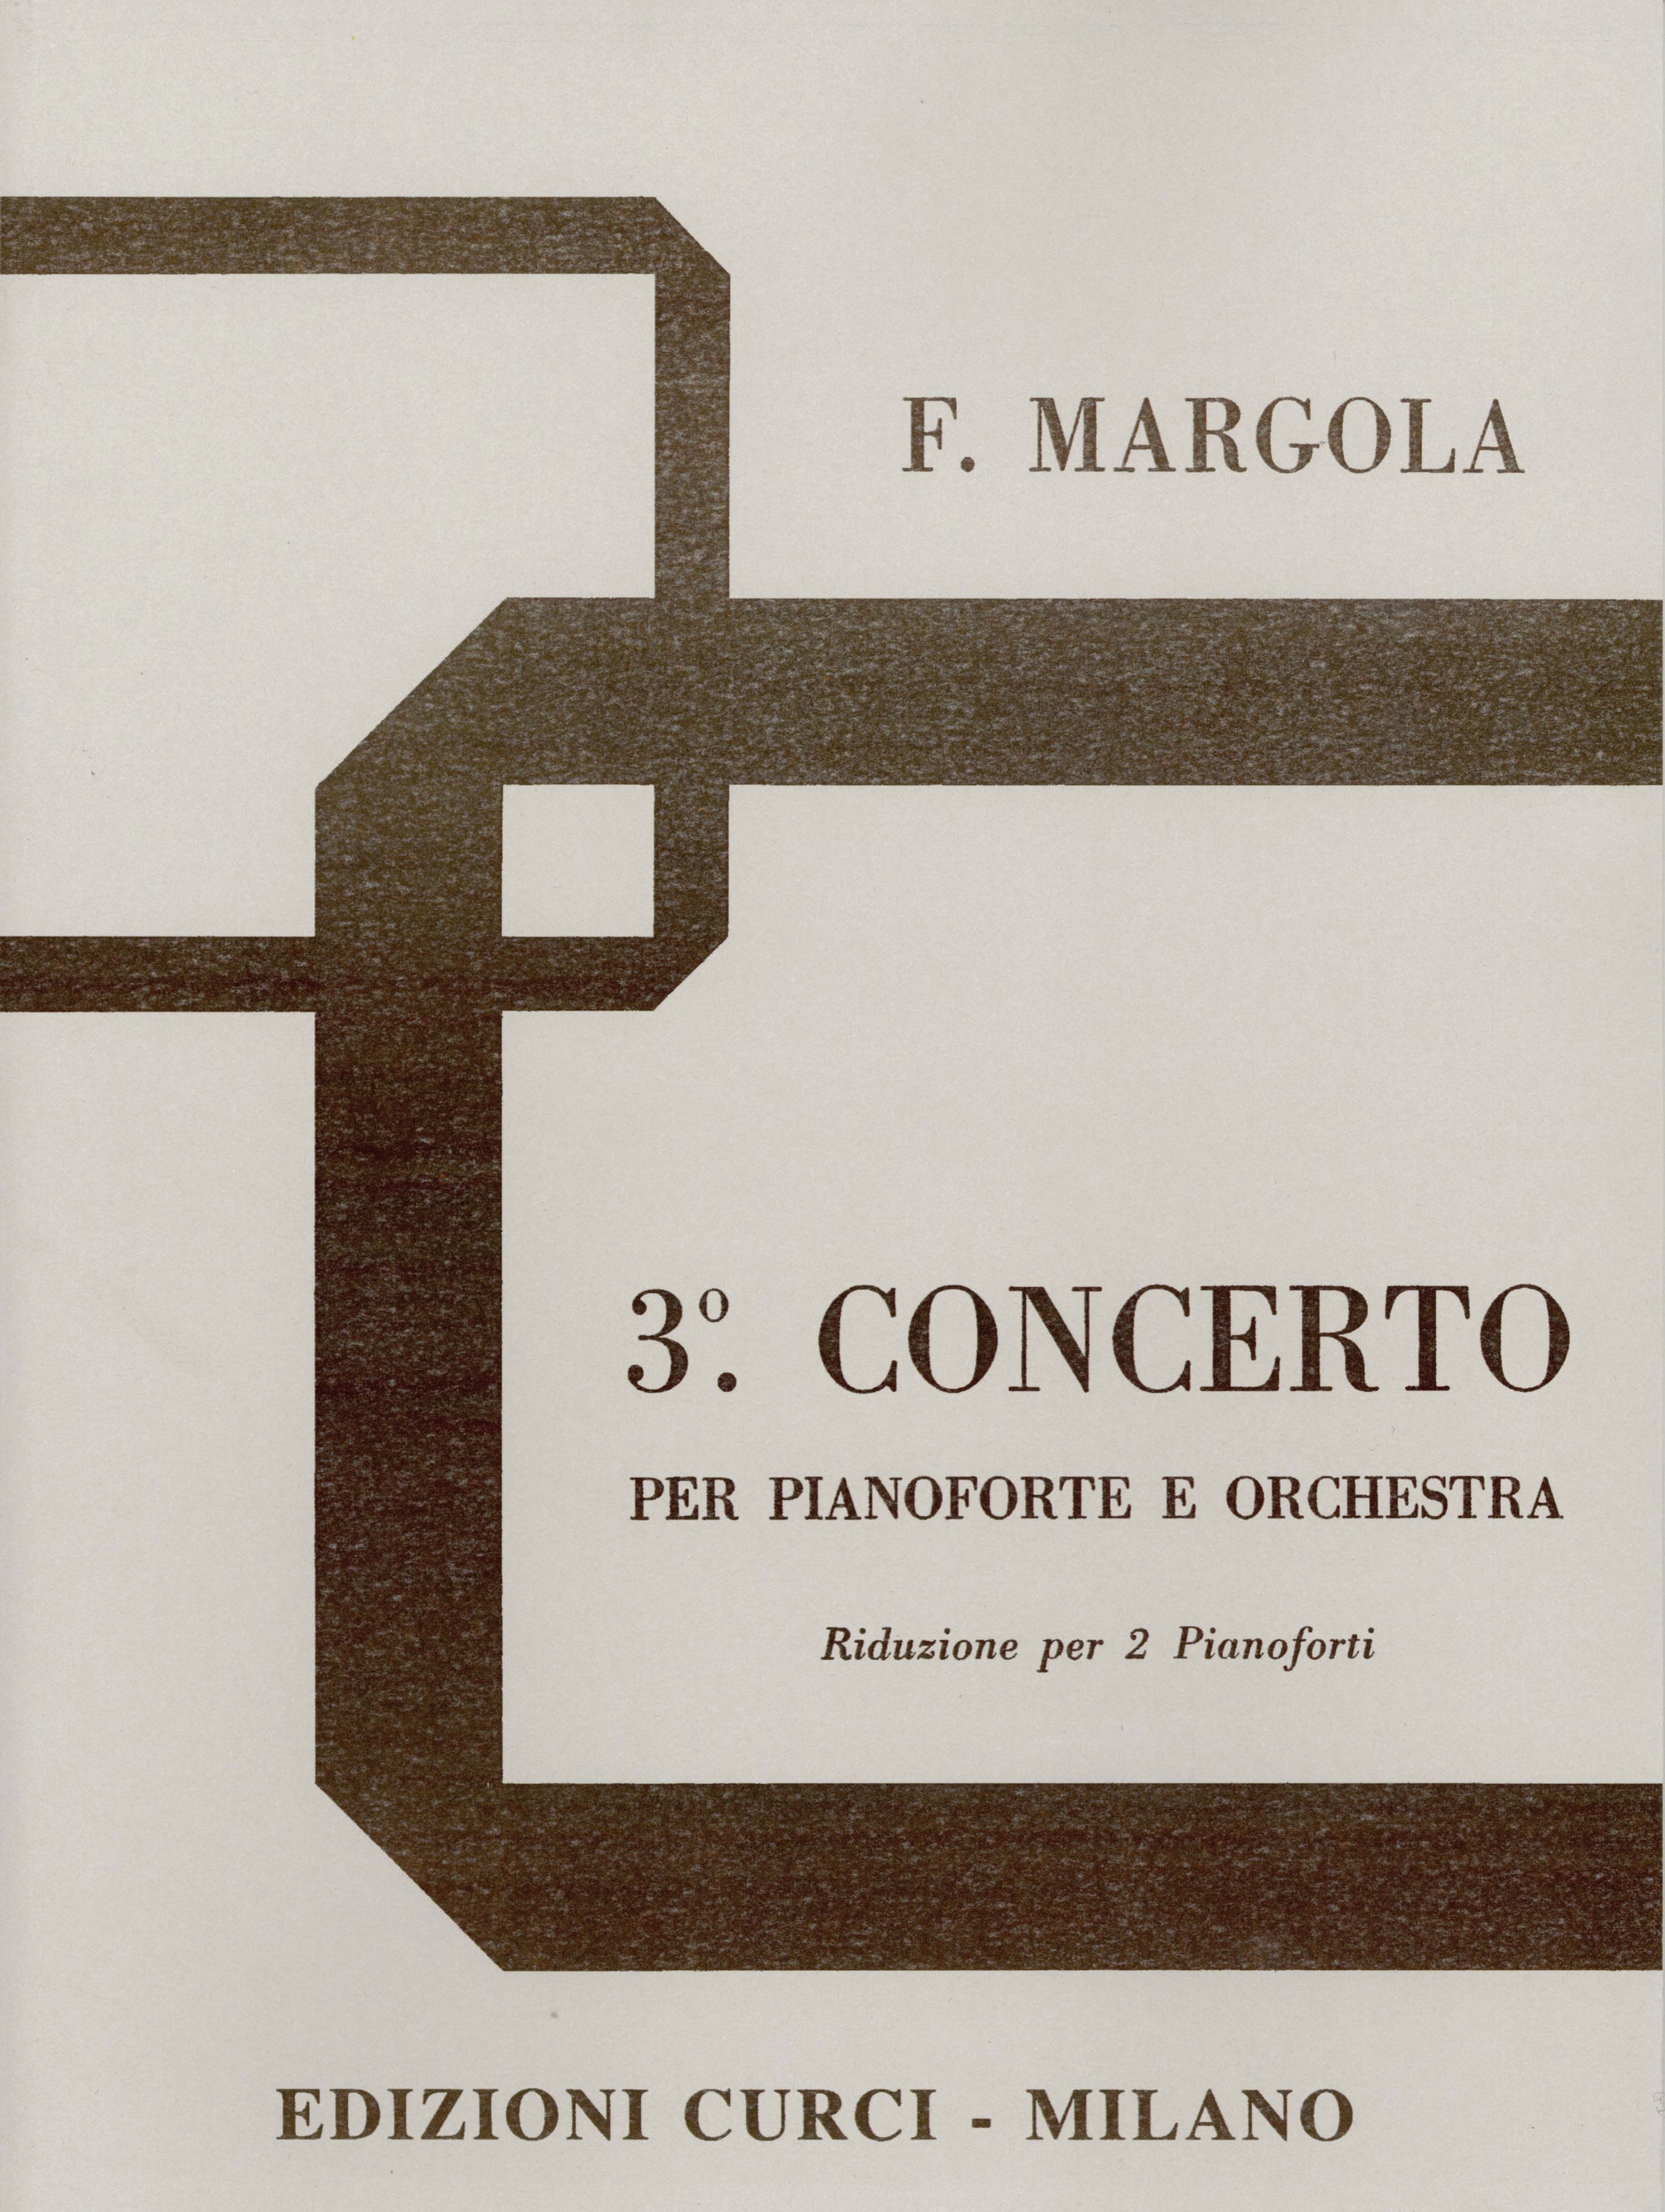 Margola: Piano Concerto No. 3